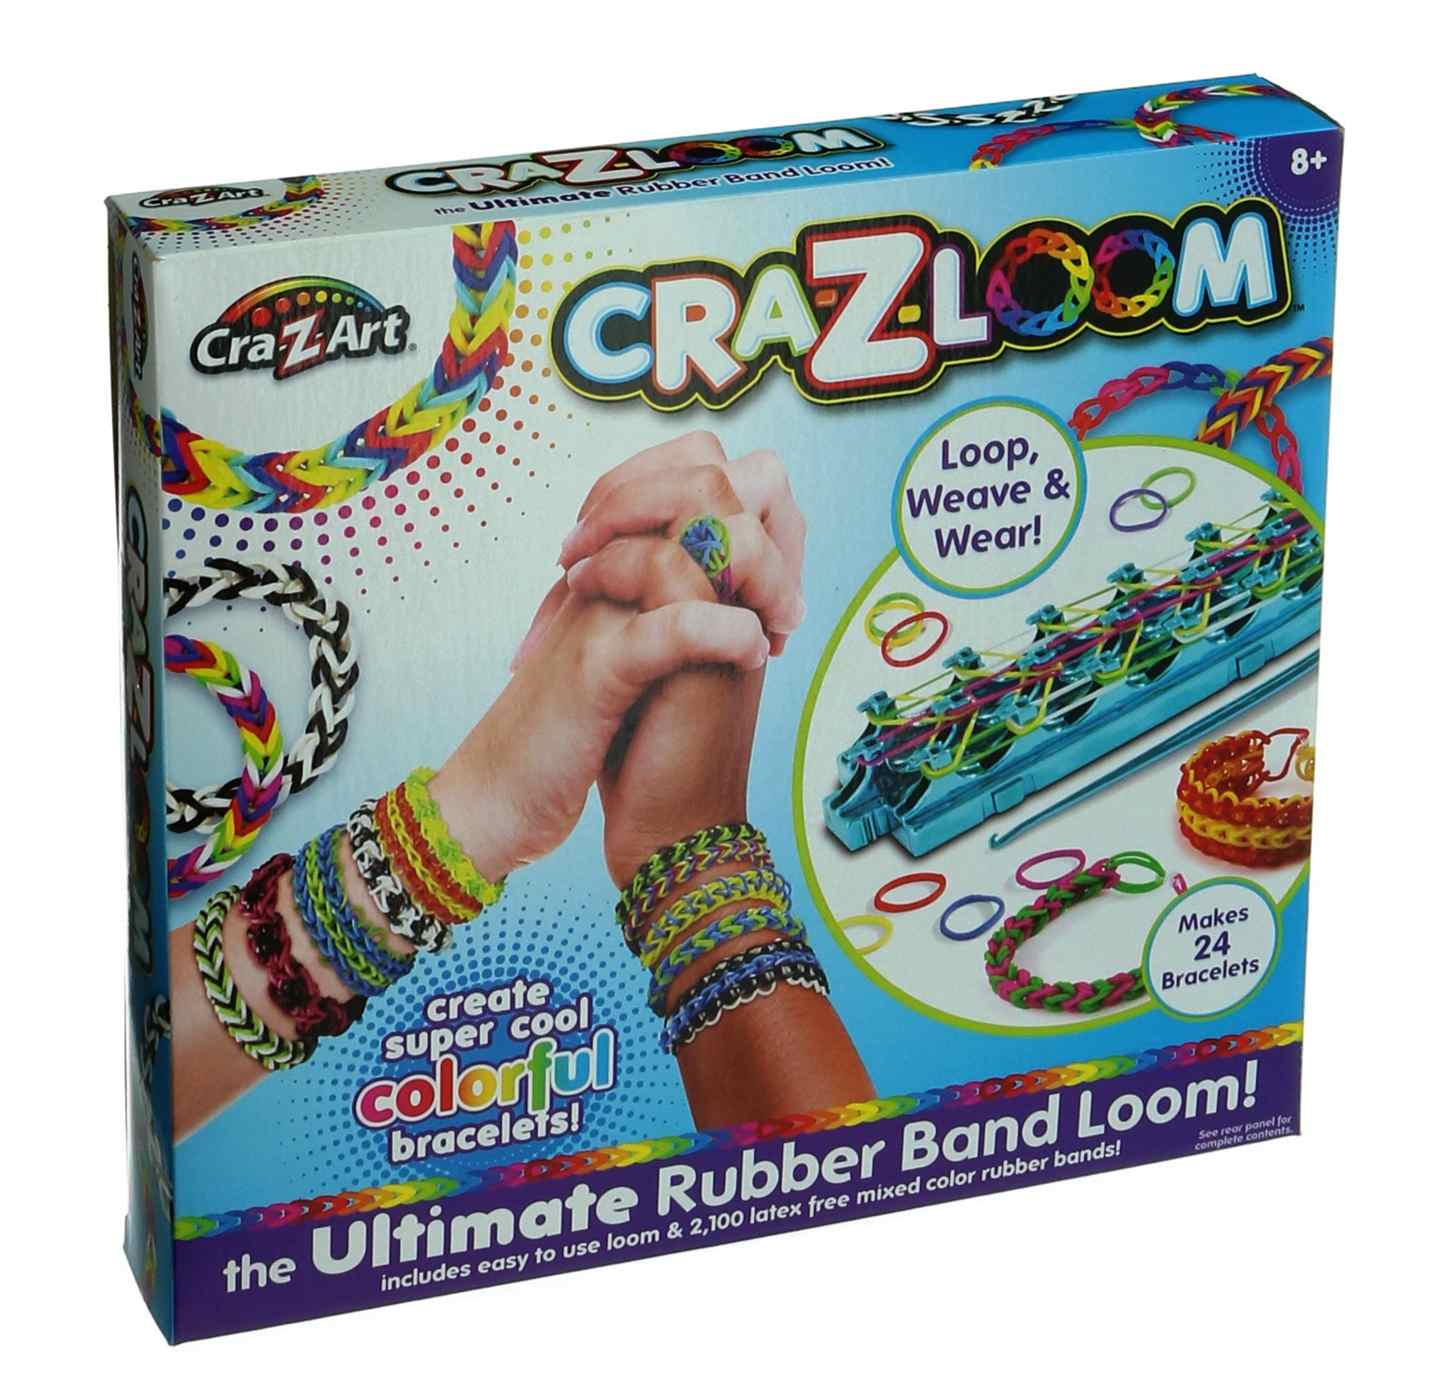 The Ultimate Rubber band Bracelet Maker